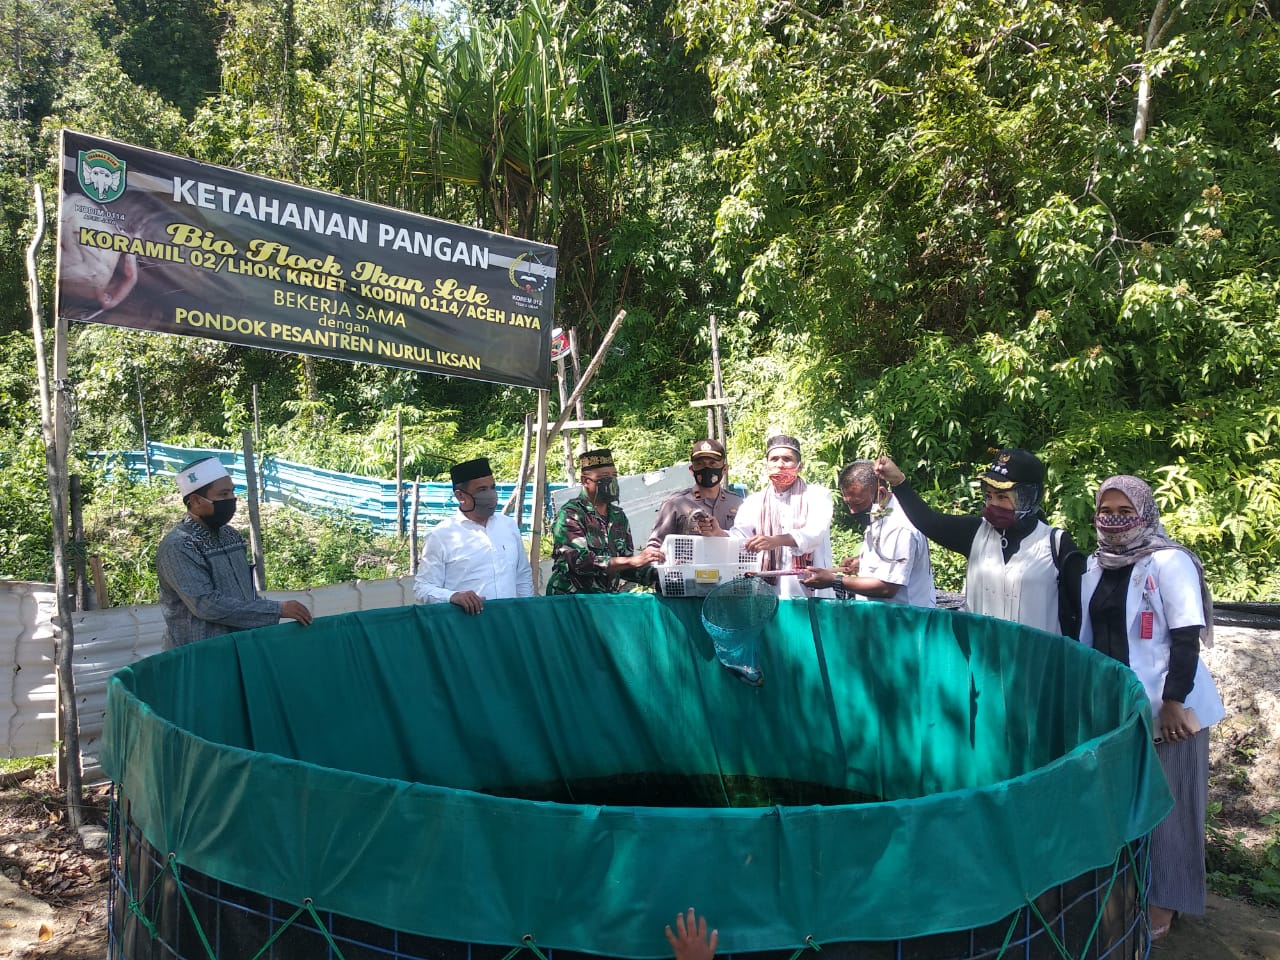 Dibantu Kodim Aceh Jaya, Kini Pesantren Nurul Ikhsan Mulai Panen Lele